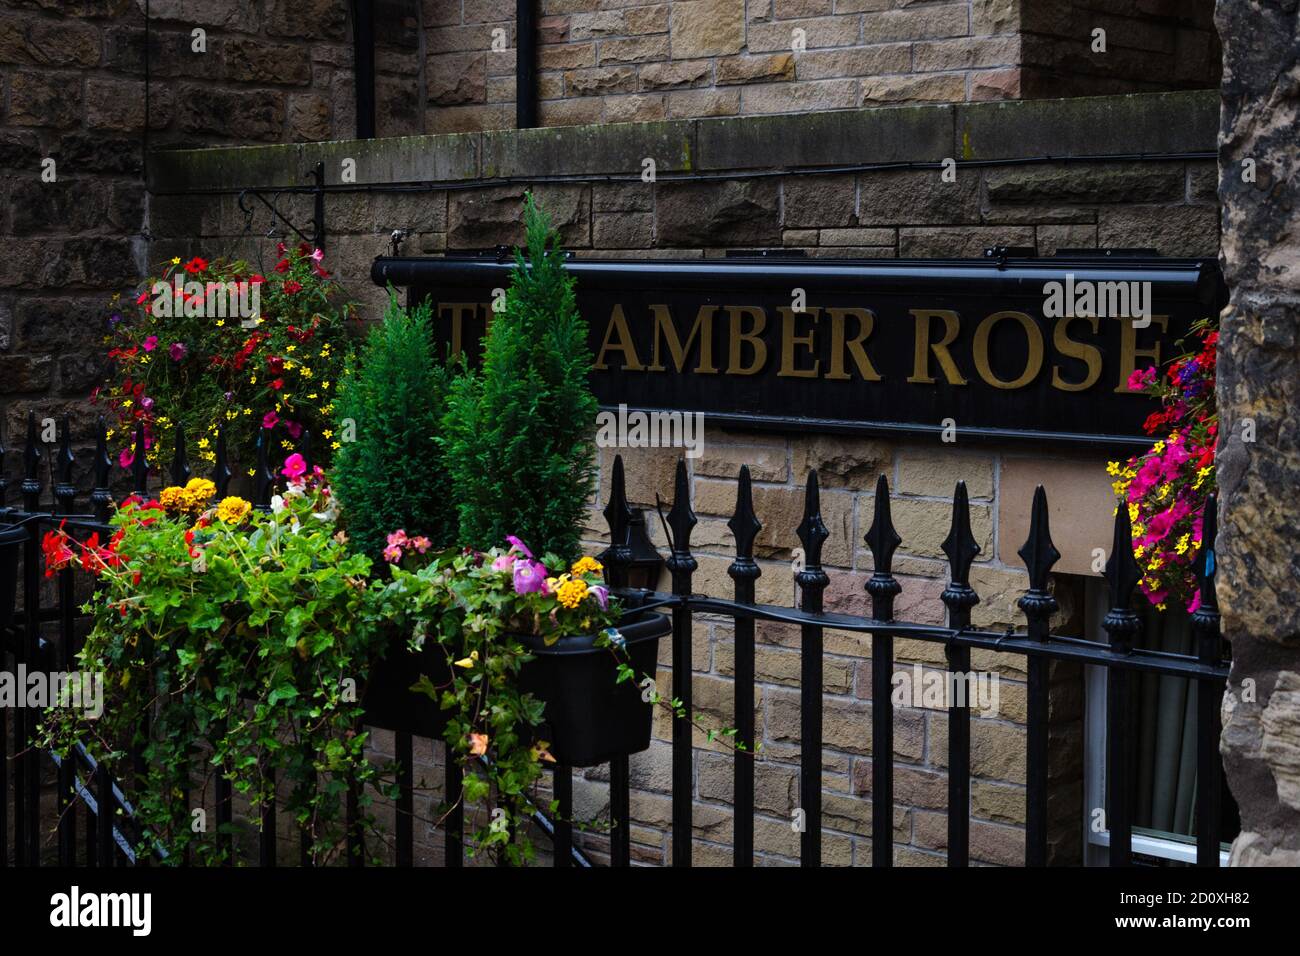 The Amber Rose facade in the Edinburgh new city, Scotland Stock Photo